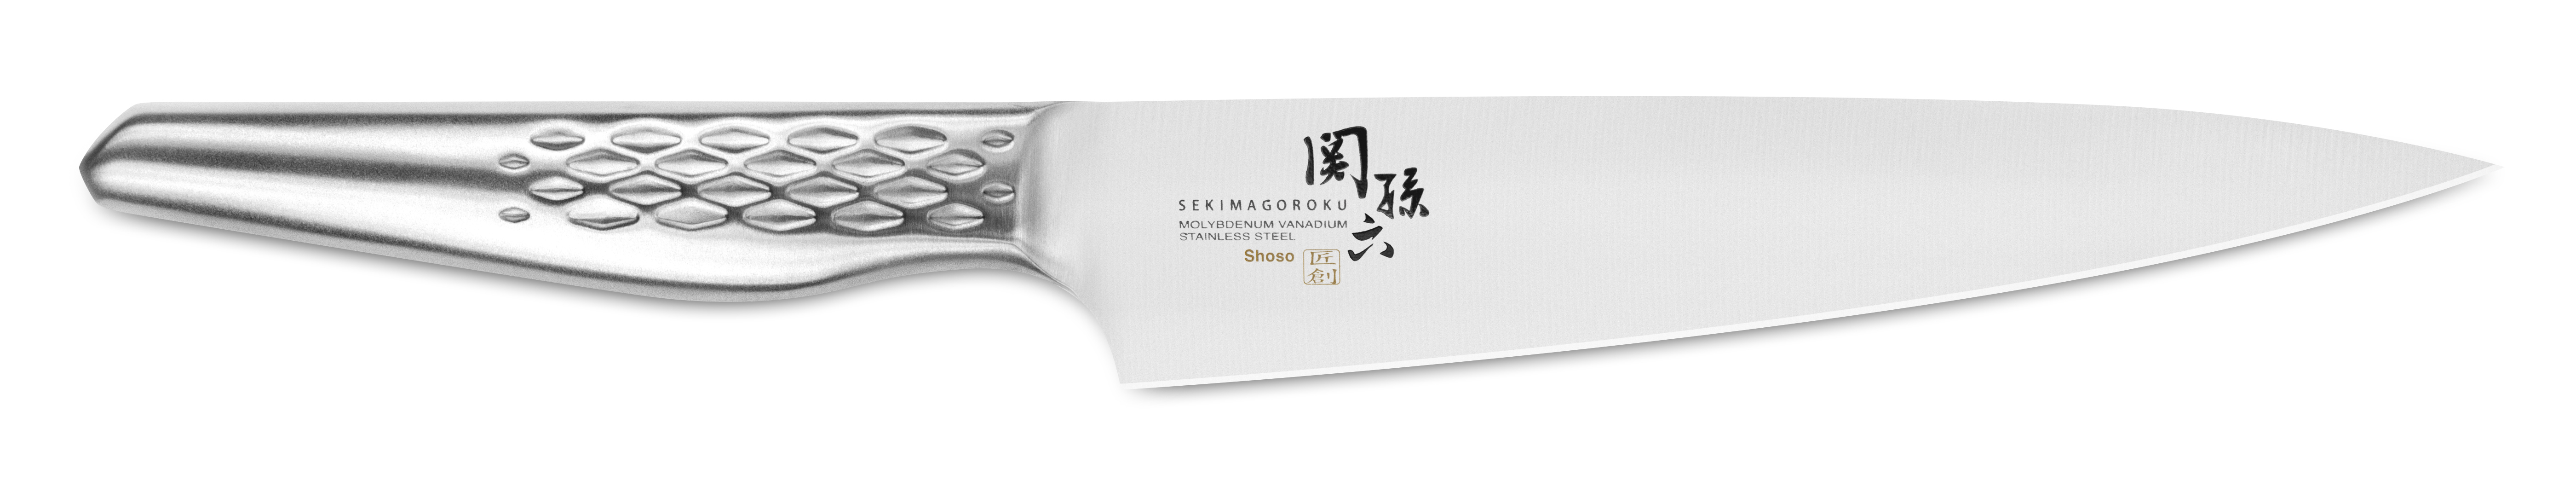 Seki Magoroku Shoso – Allzweckmesser 15 cm – AB-5161